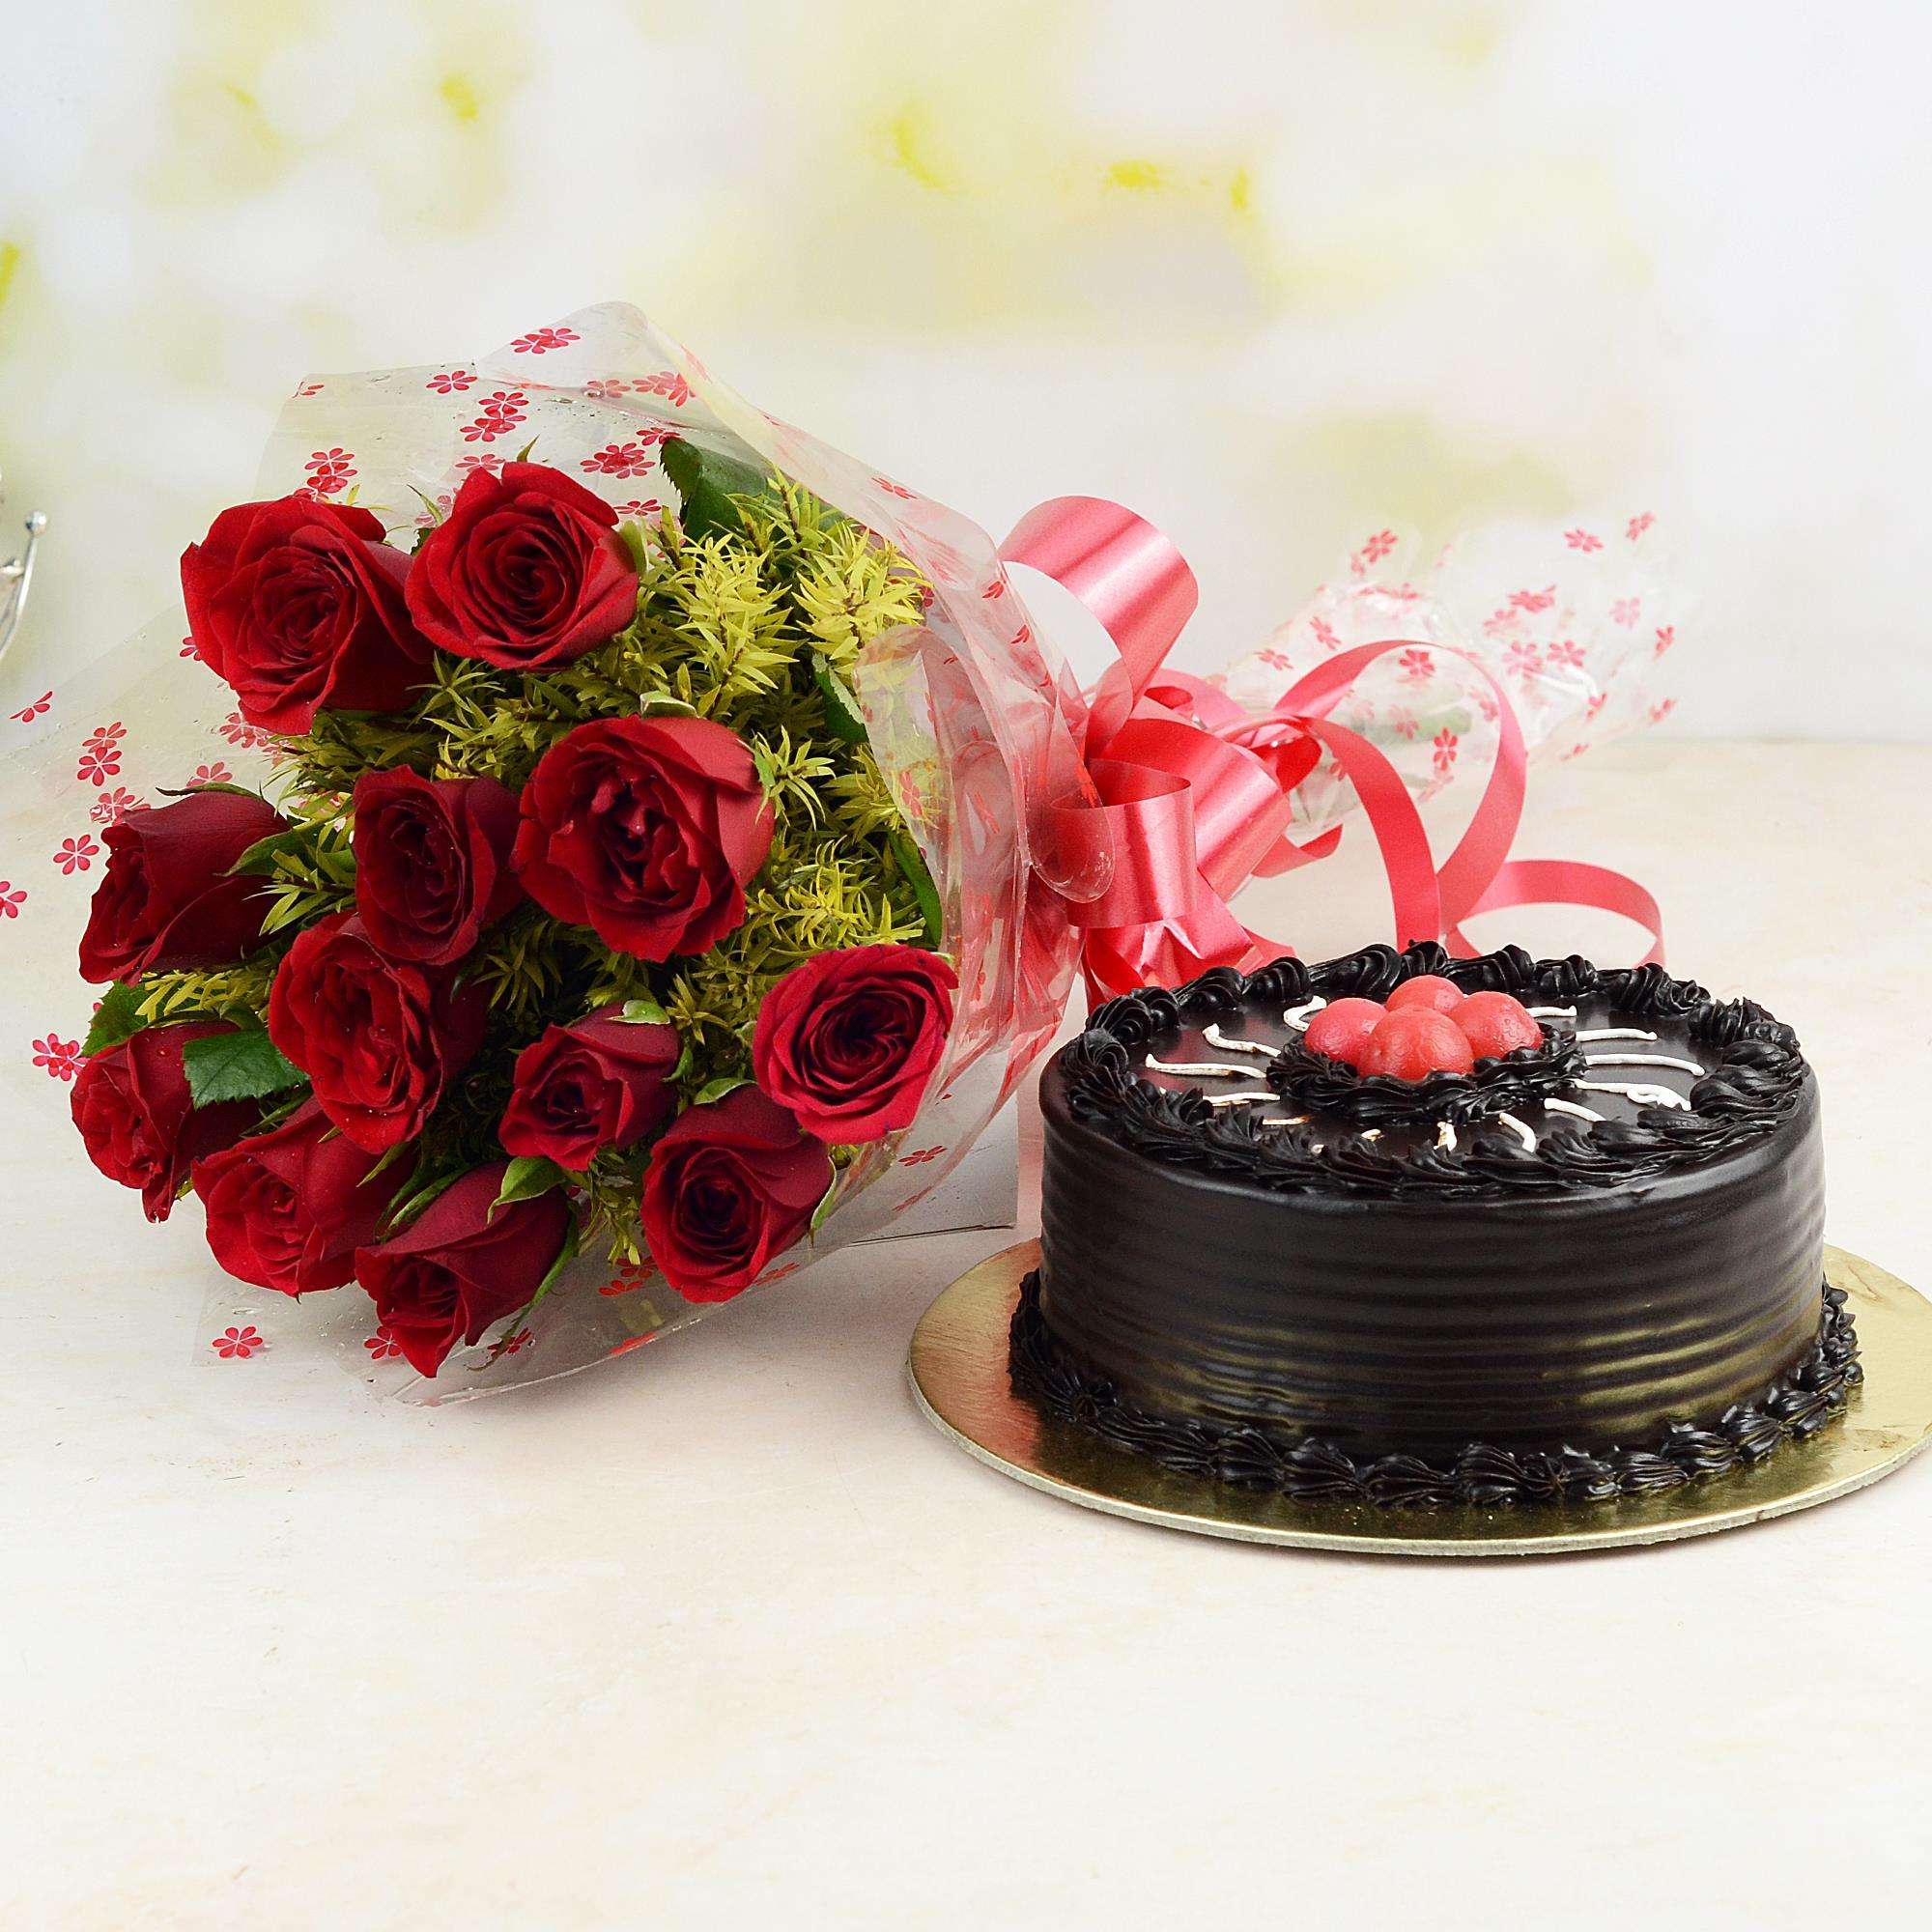 Chocolate Cake and Flowers